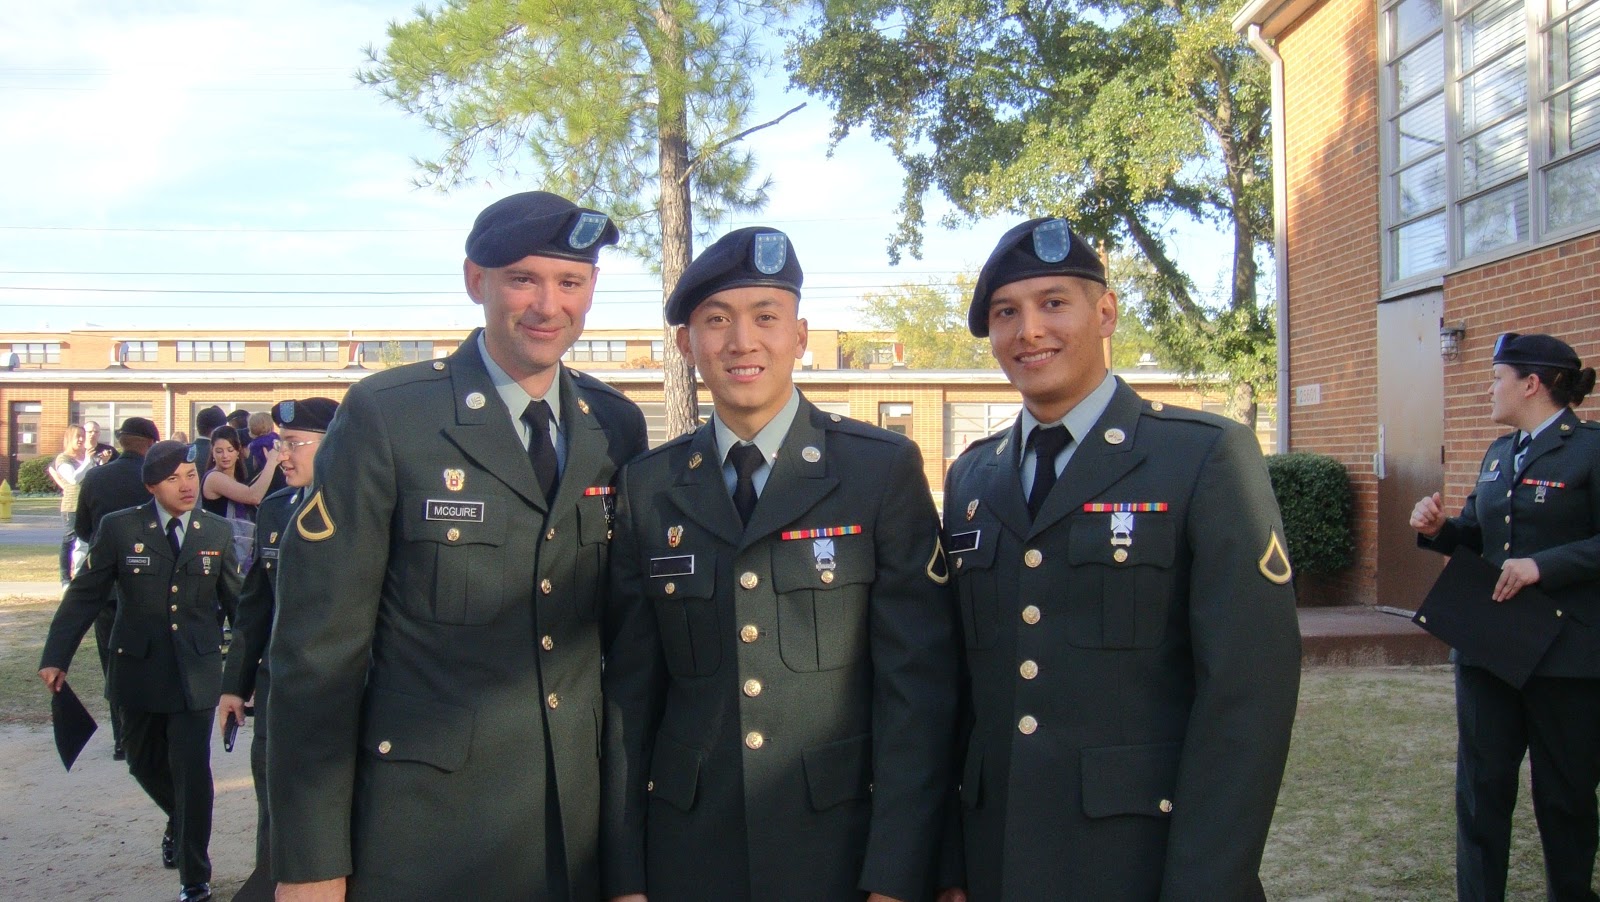 My Army Experience Graduation Photos (AIT Fort Gordon)